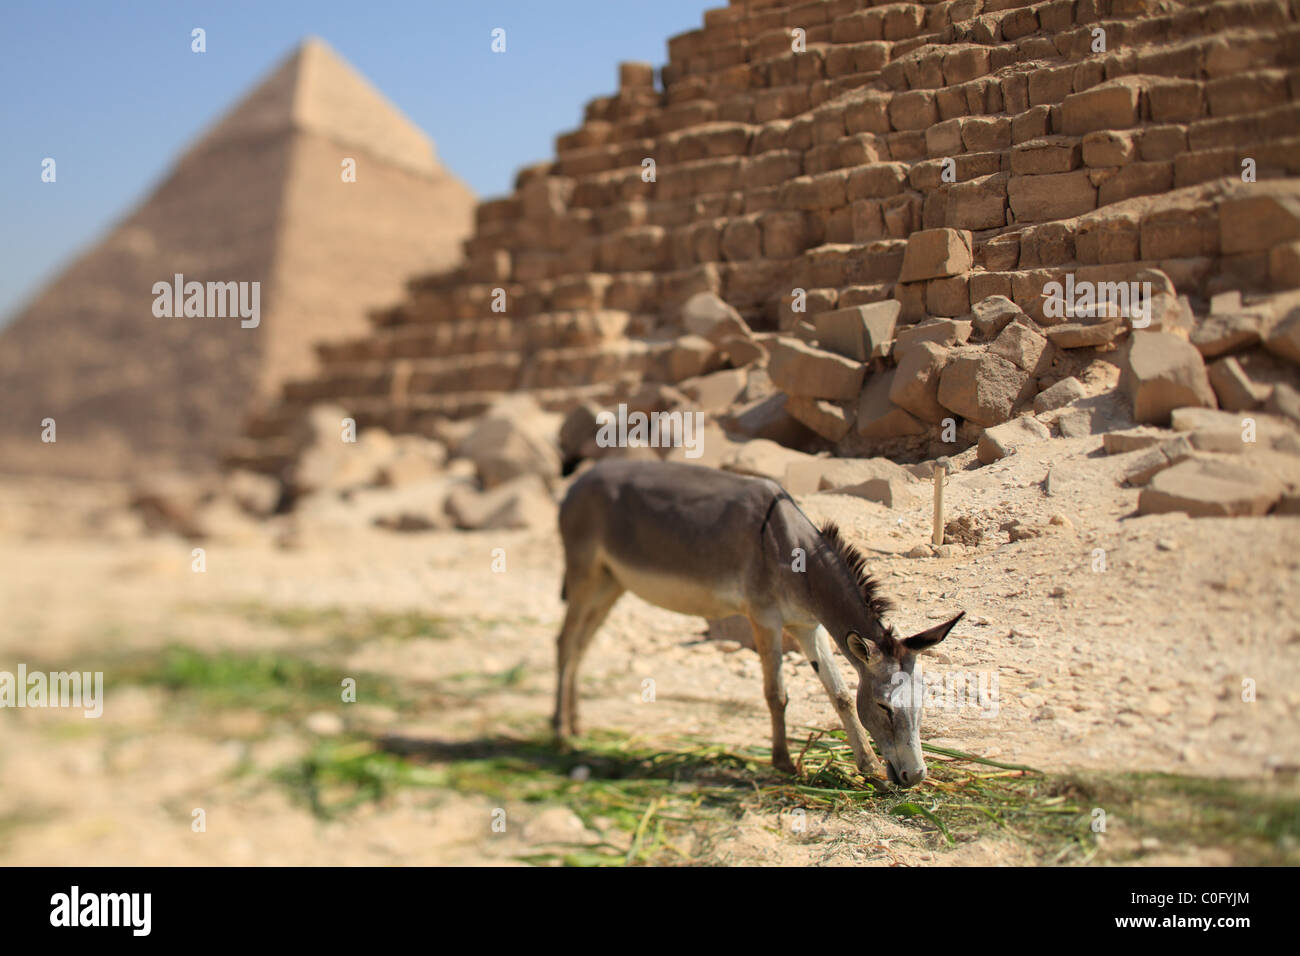 Maultier bei den Pyramiden in Gizeh, Ägypten - selektiven Fokus Fütterung. Stockfoto